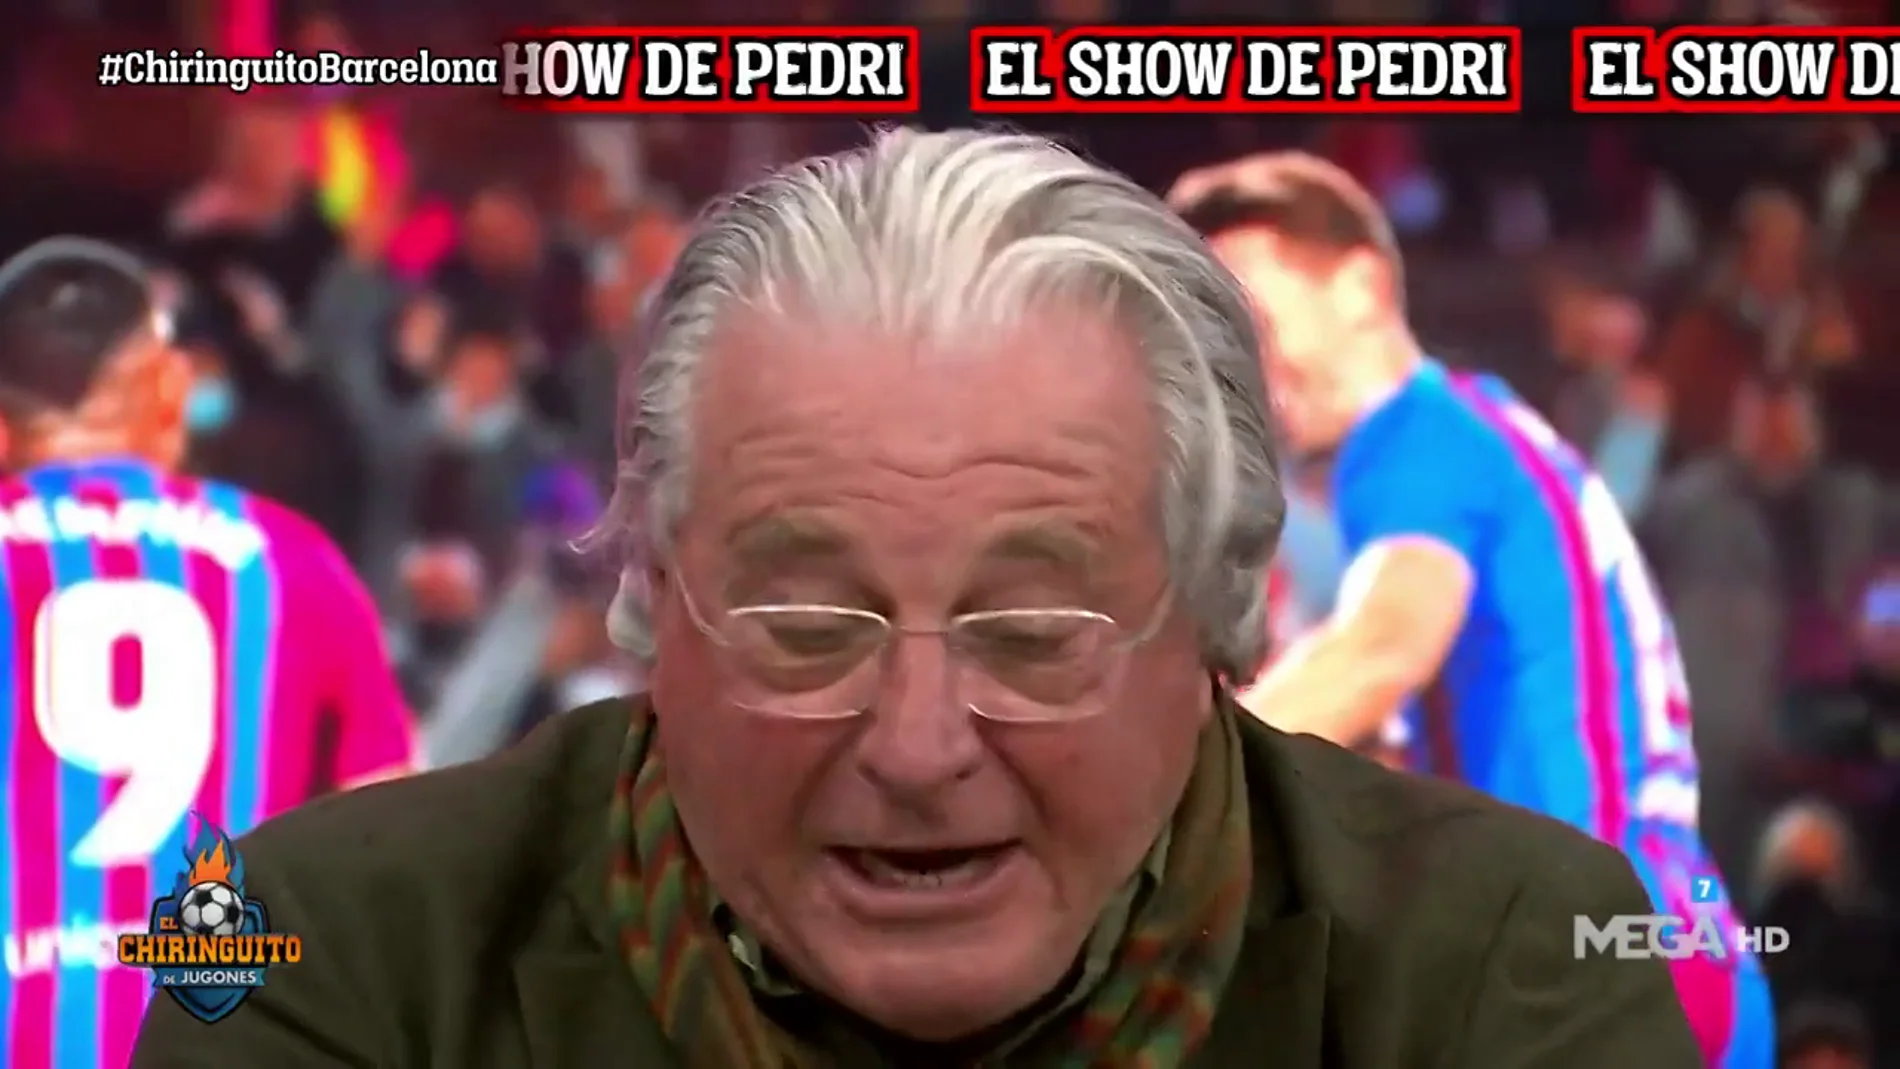 Jorge D'Alessandro: "¿Qué hizo Pedri para ser el MVP?"